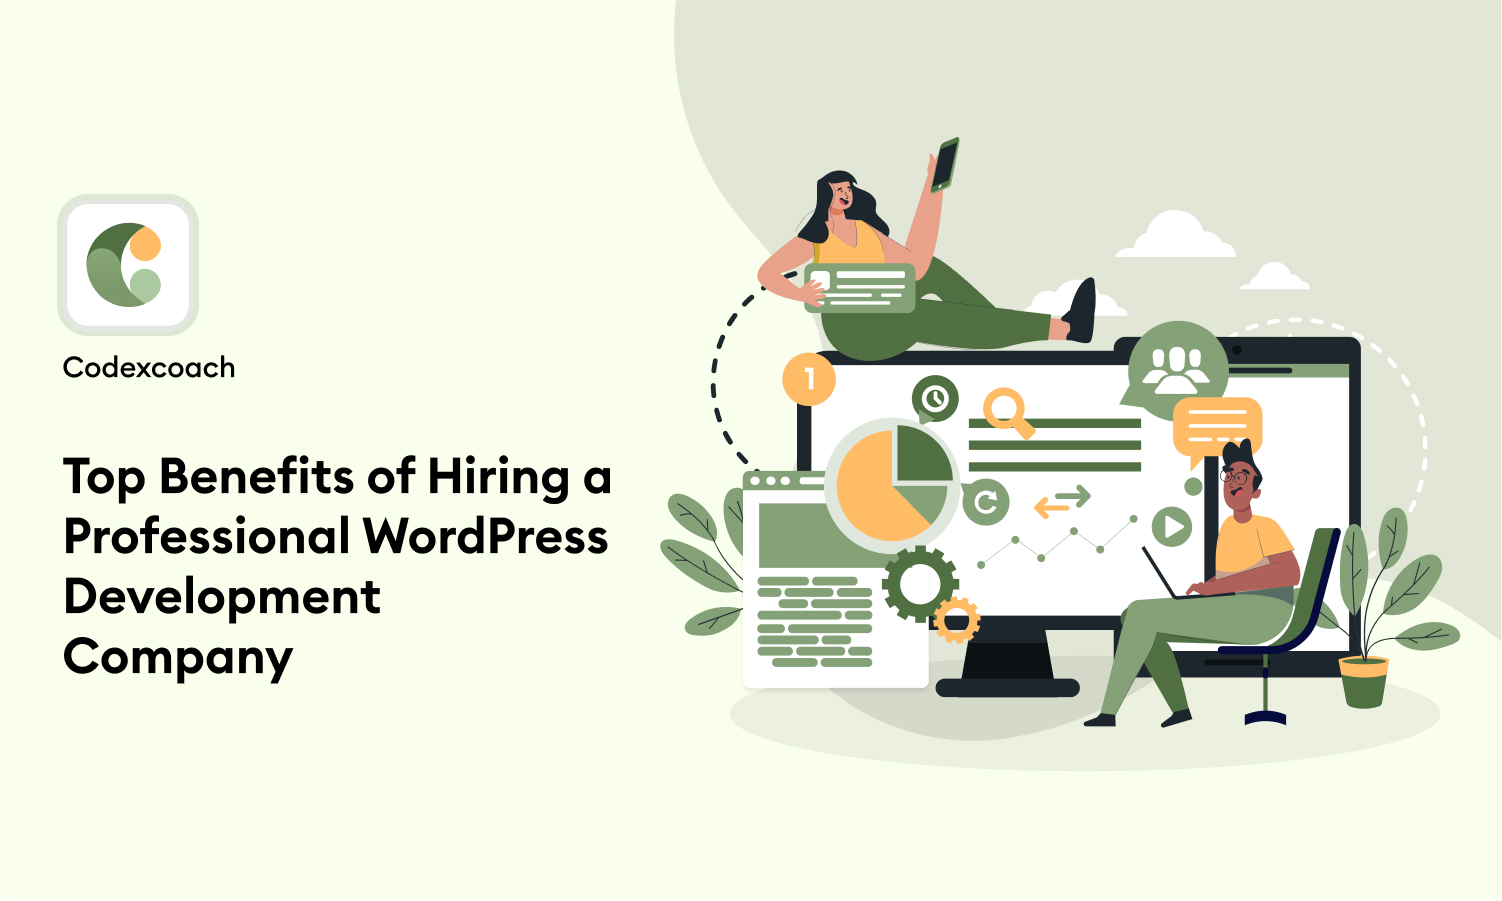 Top Benefits of Hiring a Professional WordPress Development Company